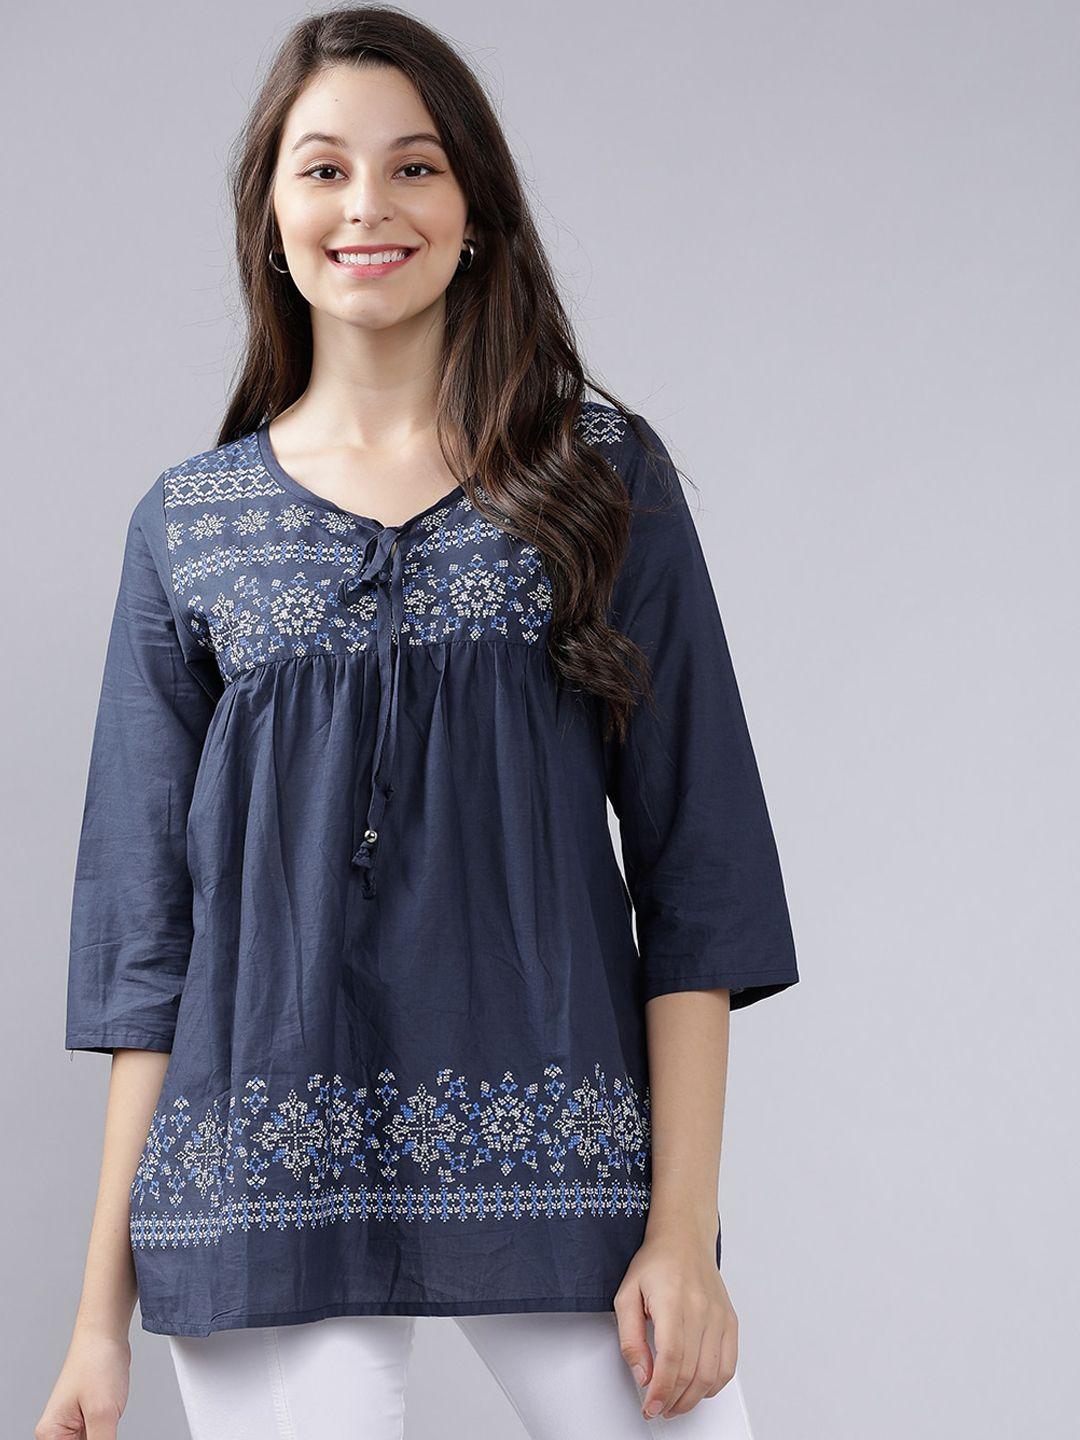 mumbai-slang-chic-women-navy-blue-printed-a-line-top